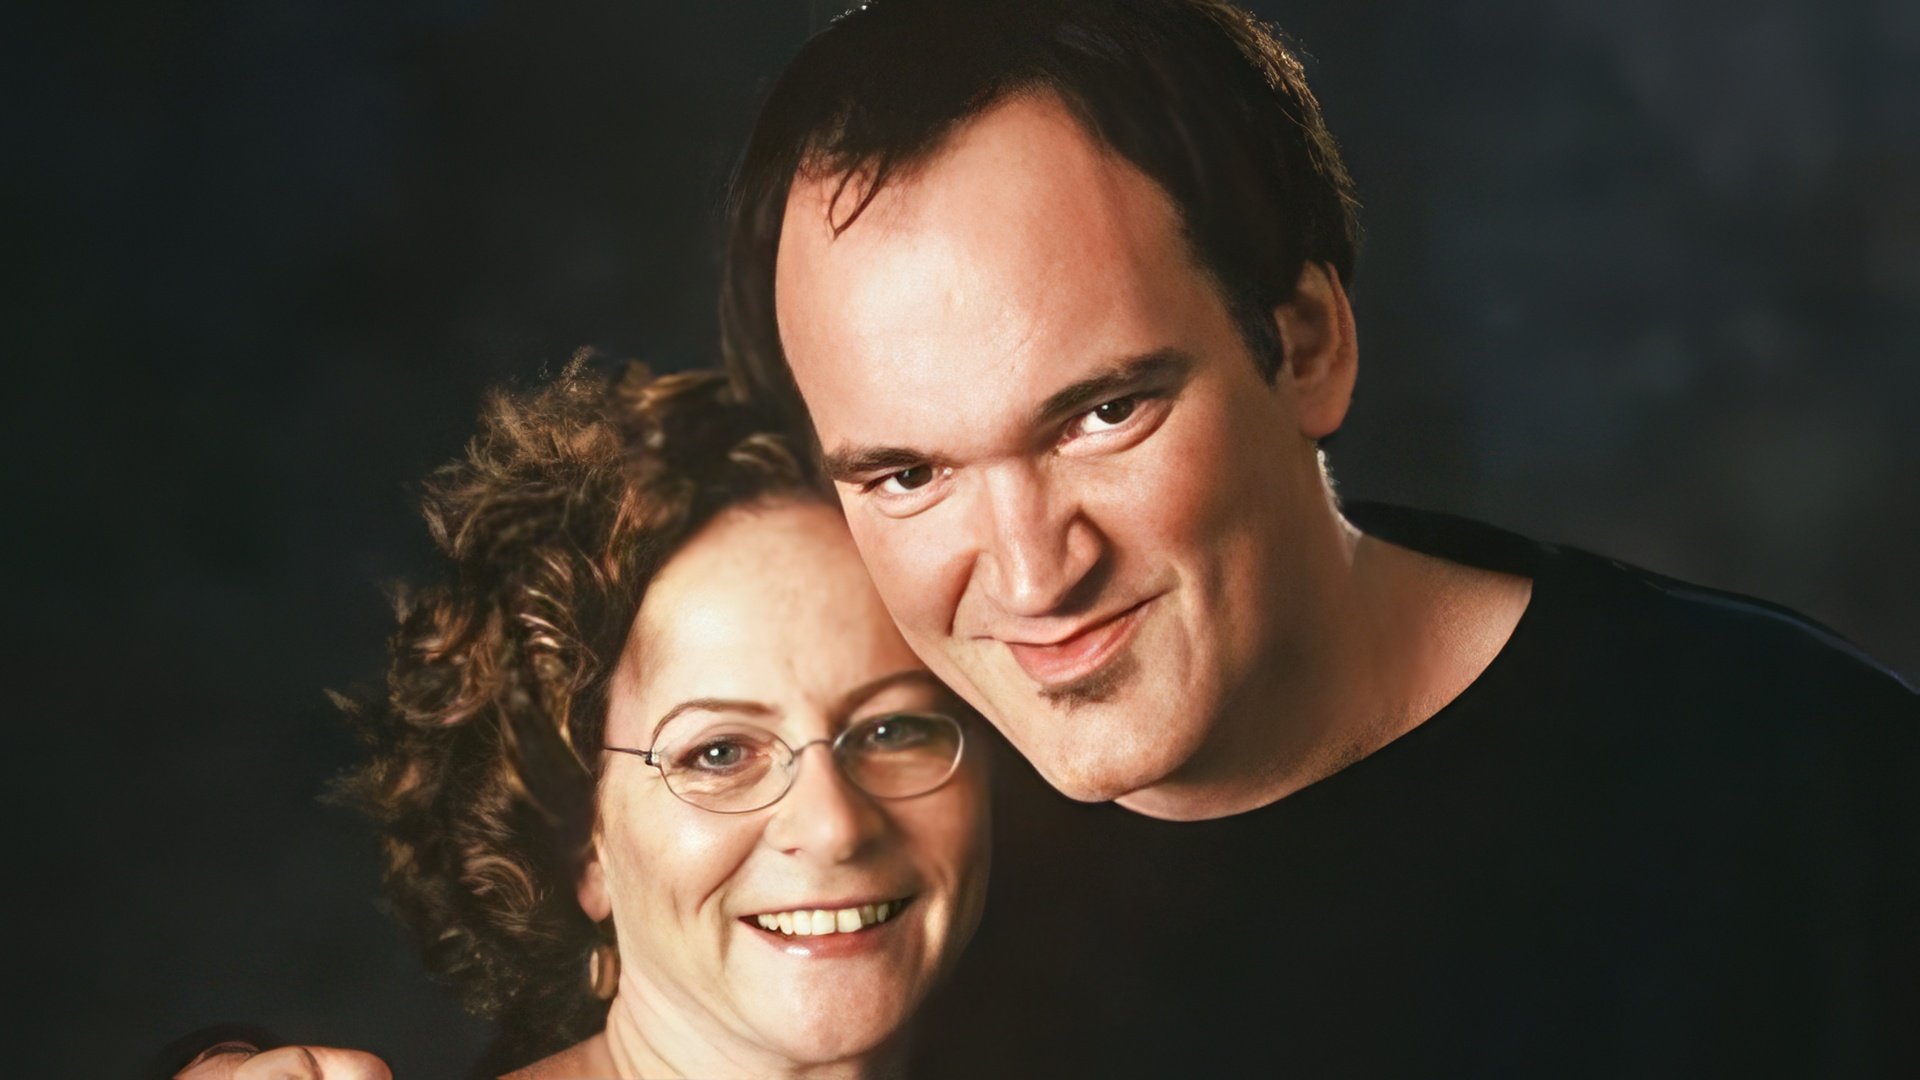 Quentin Tarantino and Sally Menke